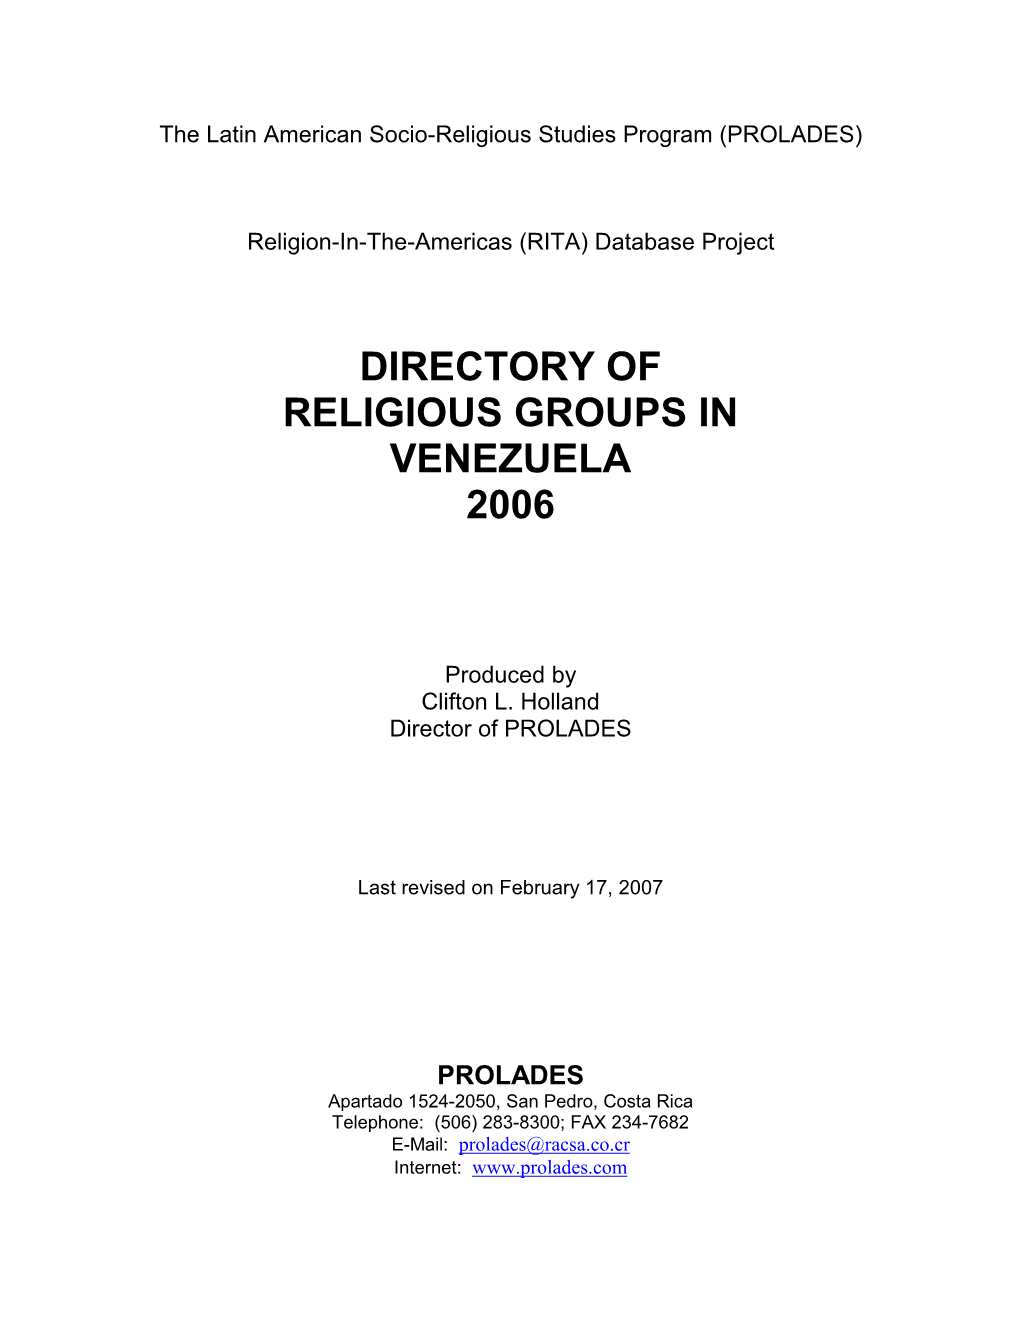 Directory of Religious Groups in Venezuela, 2006